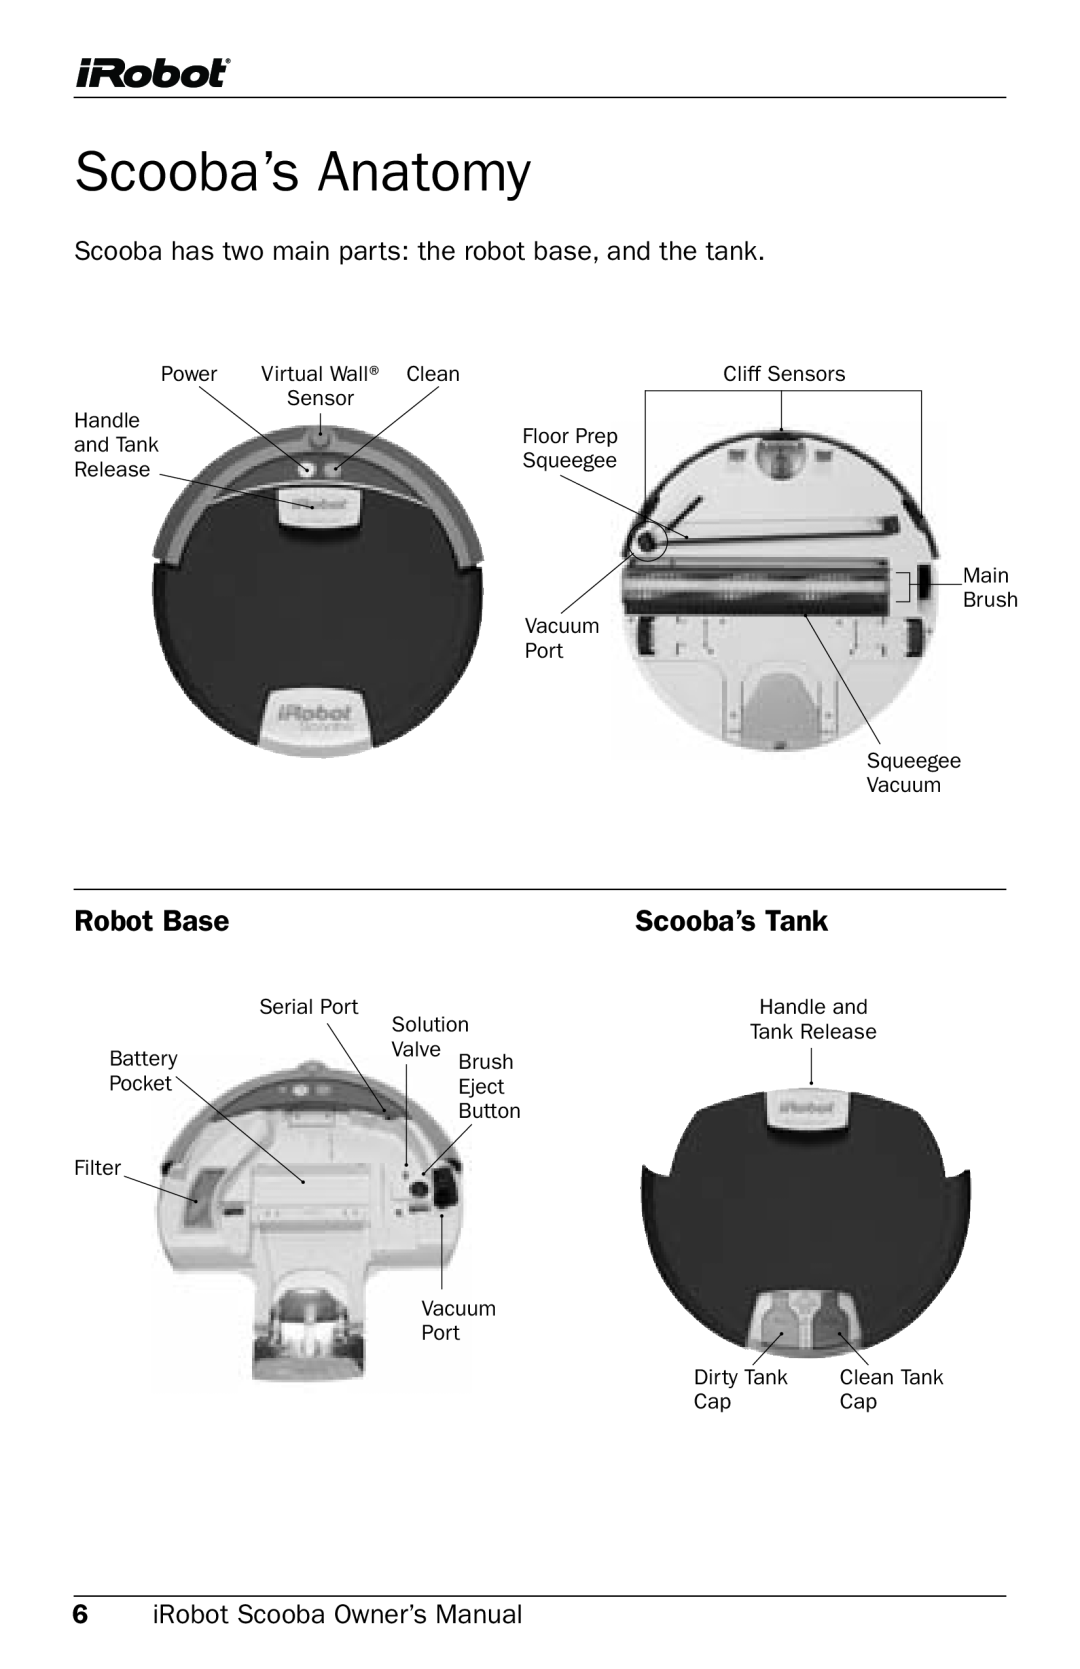 iRobot 5800 owner manual Scooba’s Anatomy, Robot Base, scooba’s Tank 